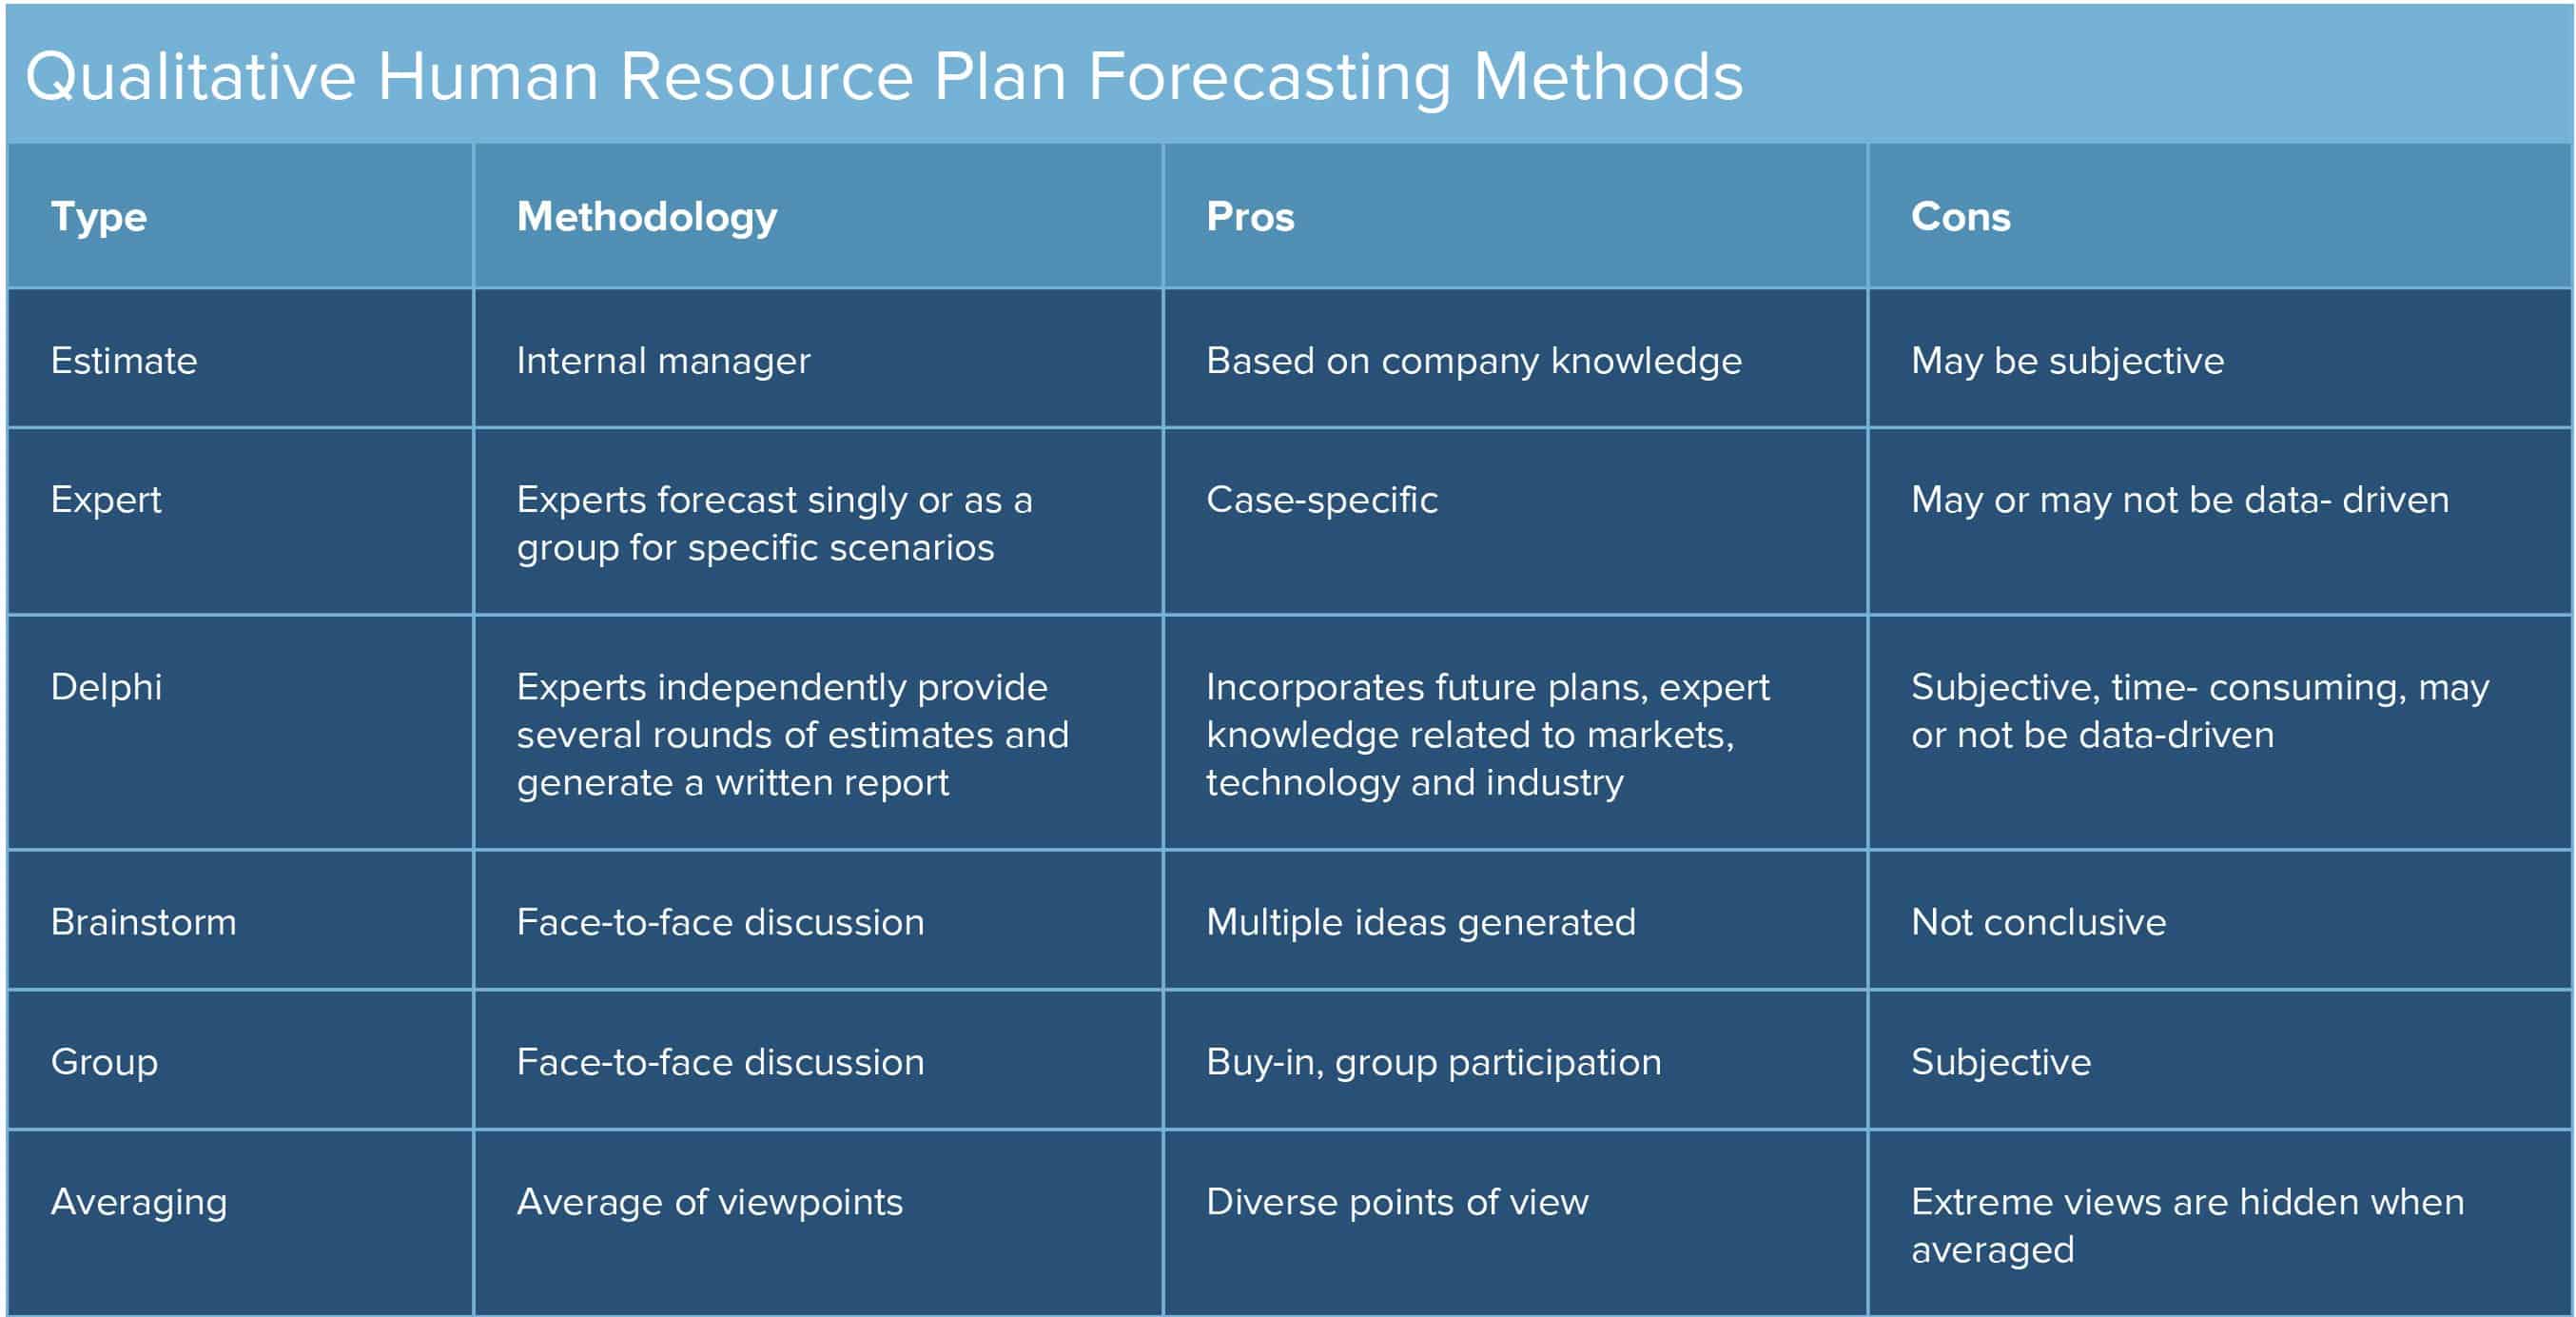 Qualitative HR Plan Forecasting Methods